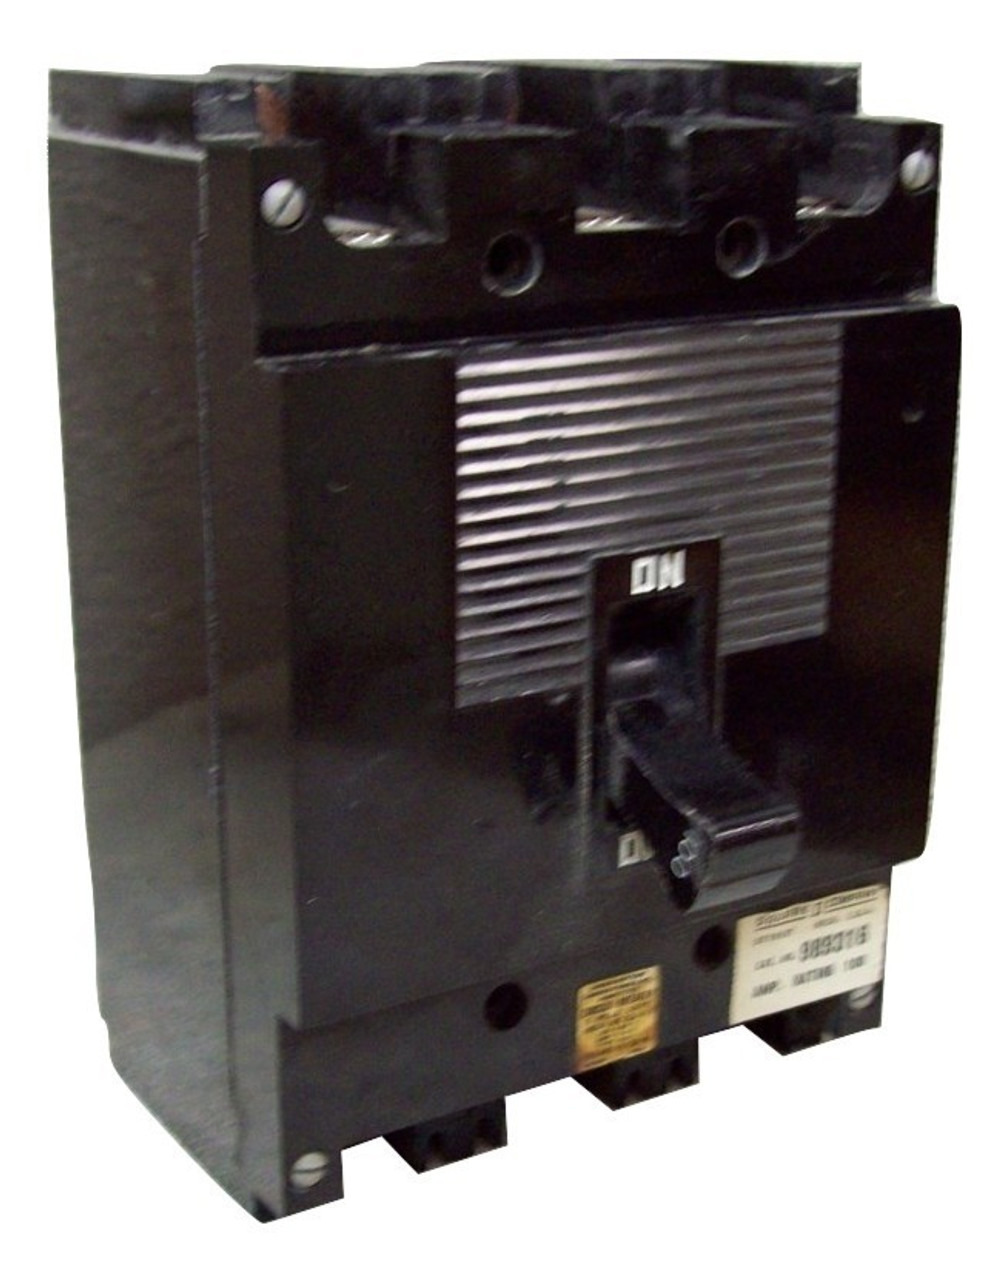 999390
ML-1 Square D Circuit Breaker
(Pic Represents all Amperages)